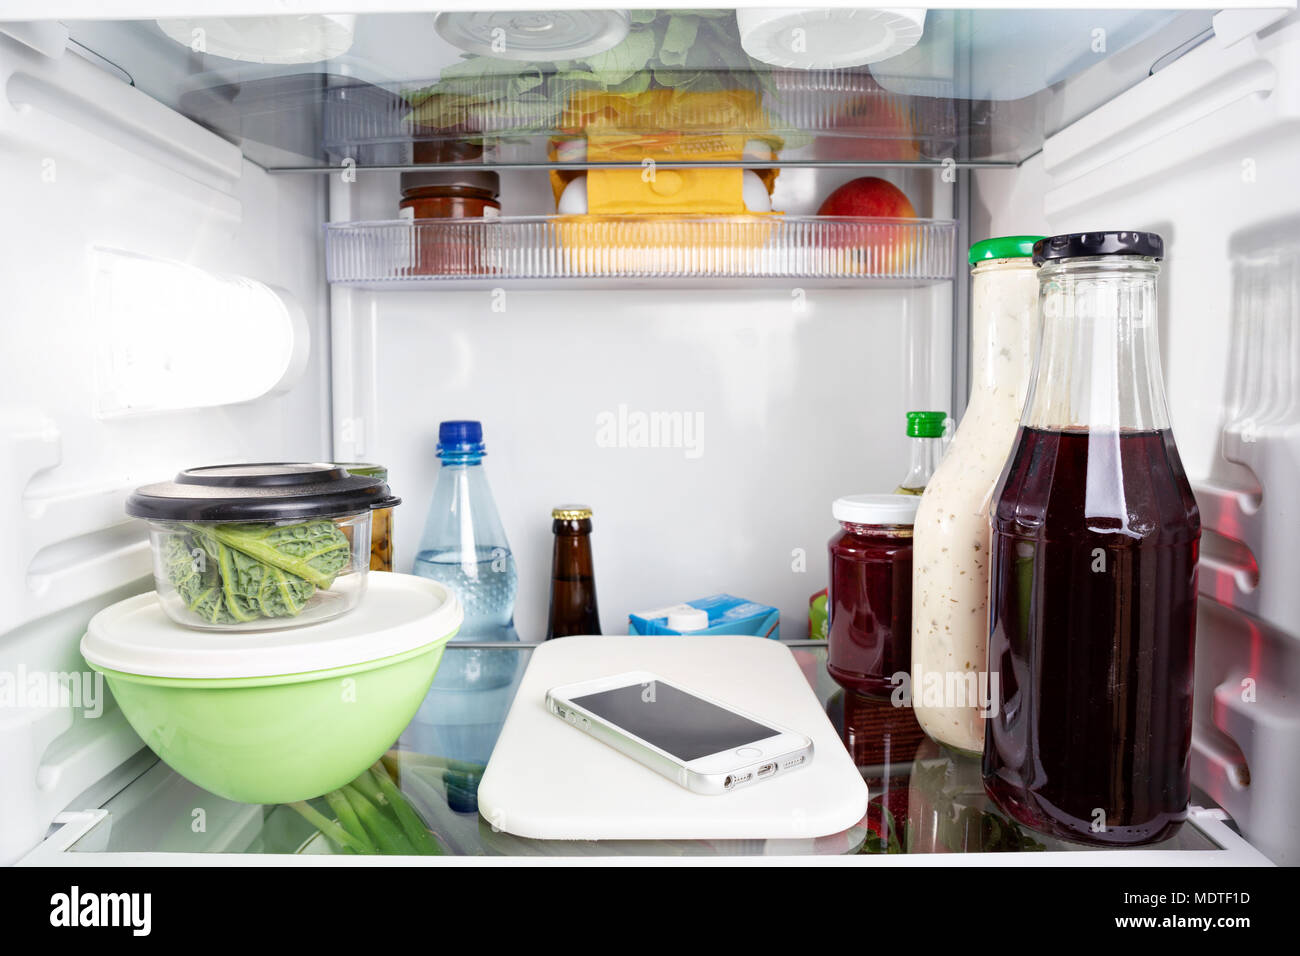 Misplaced mobile phone inside a fridge Stock Photo